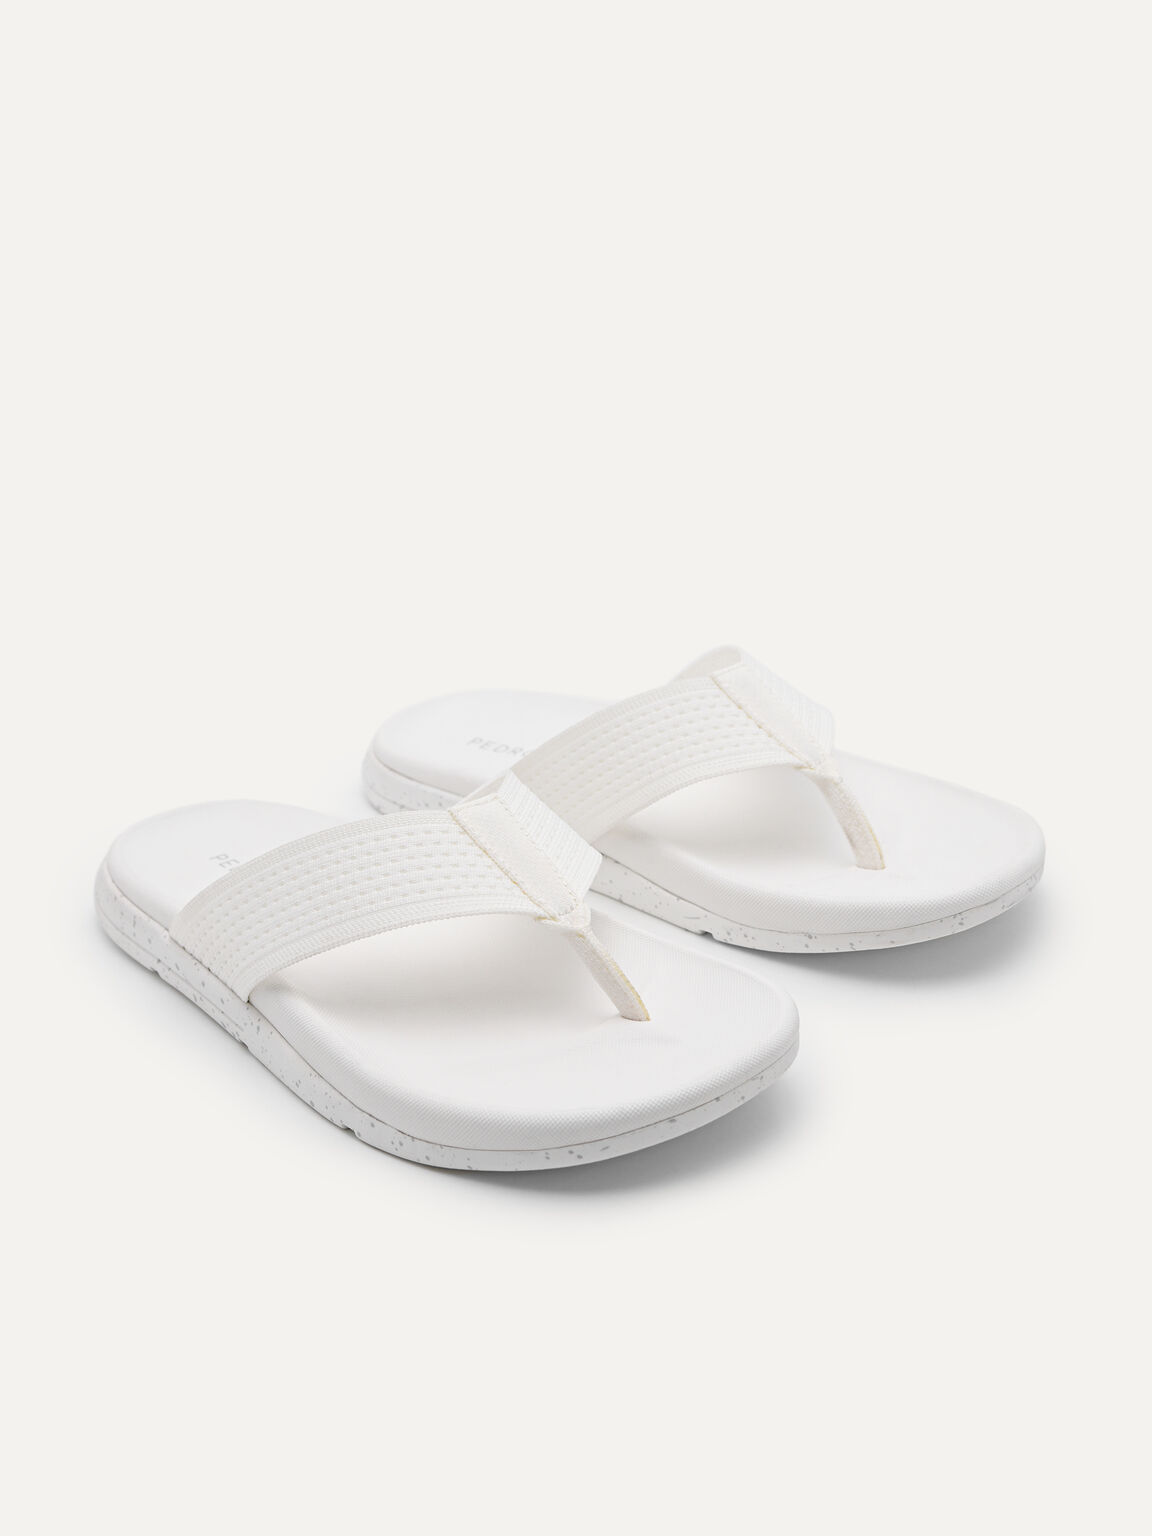 Knitted Lightweight Thong Sandal, White